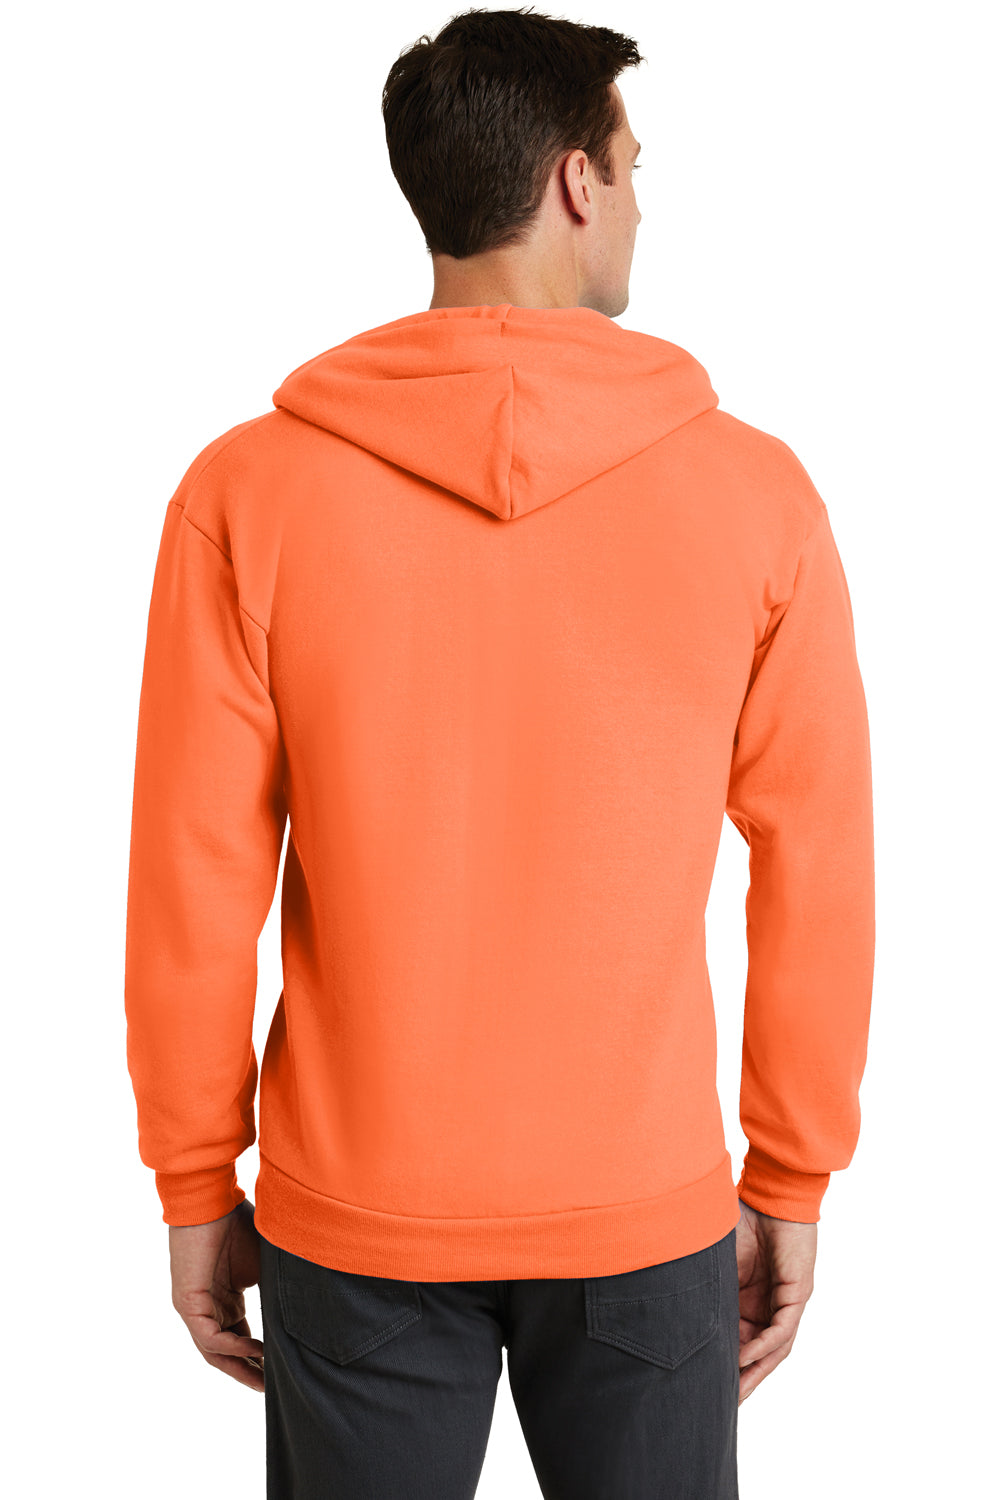 Port & Company PC78ZH Mens Core Fleece Full Zip Hooded Sweatshirt Hoodie Neon Orange Back